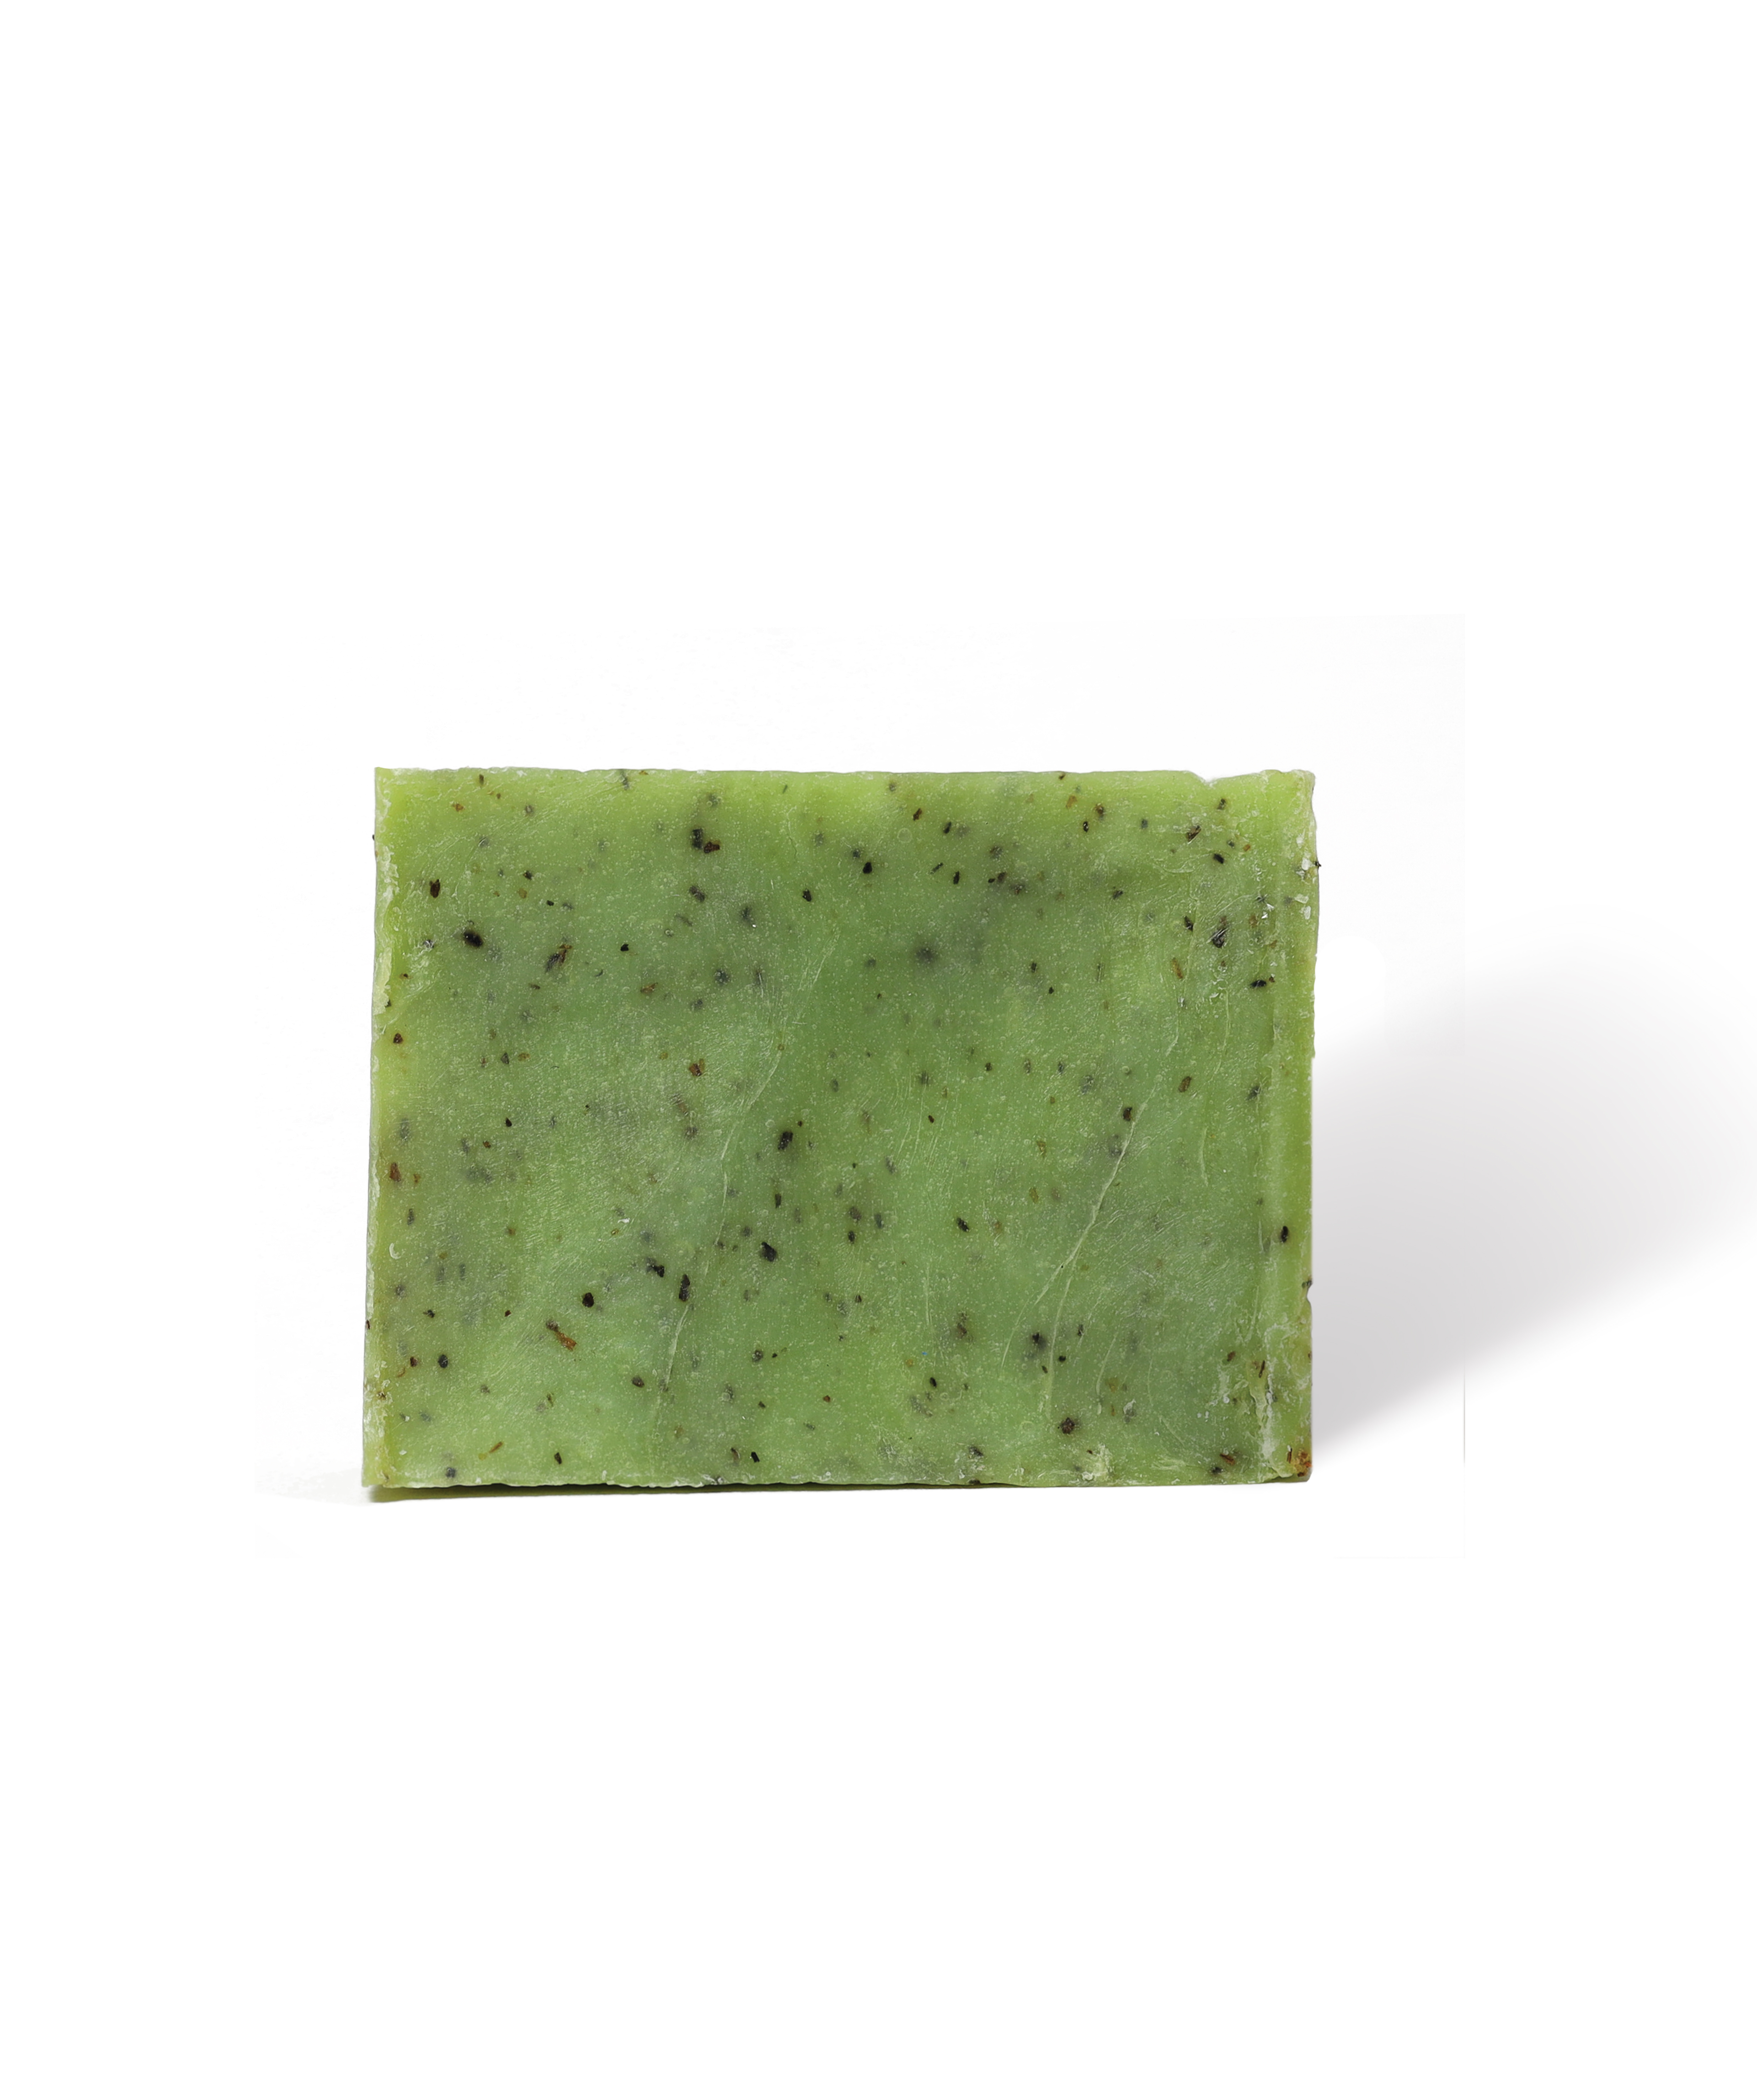 Soap `Nairian` tarragon moisturizing 60g